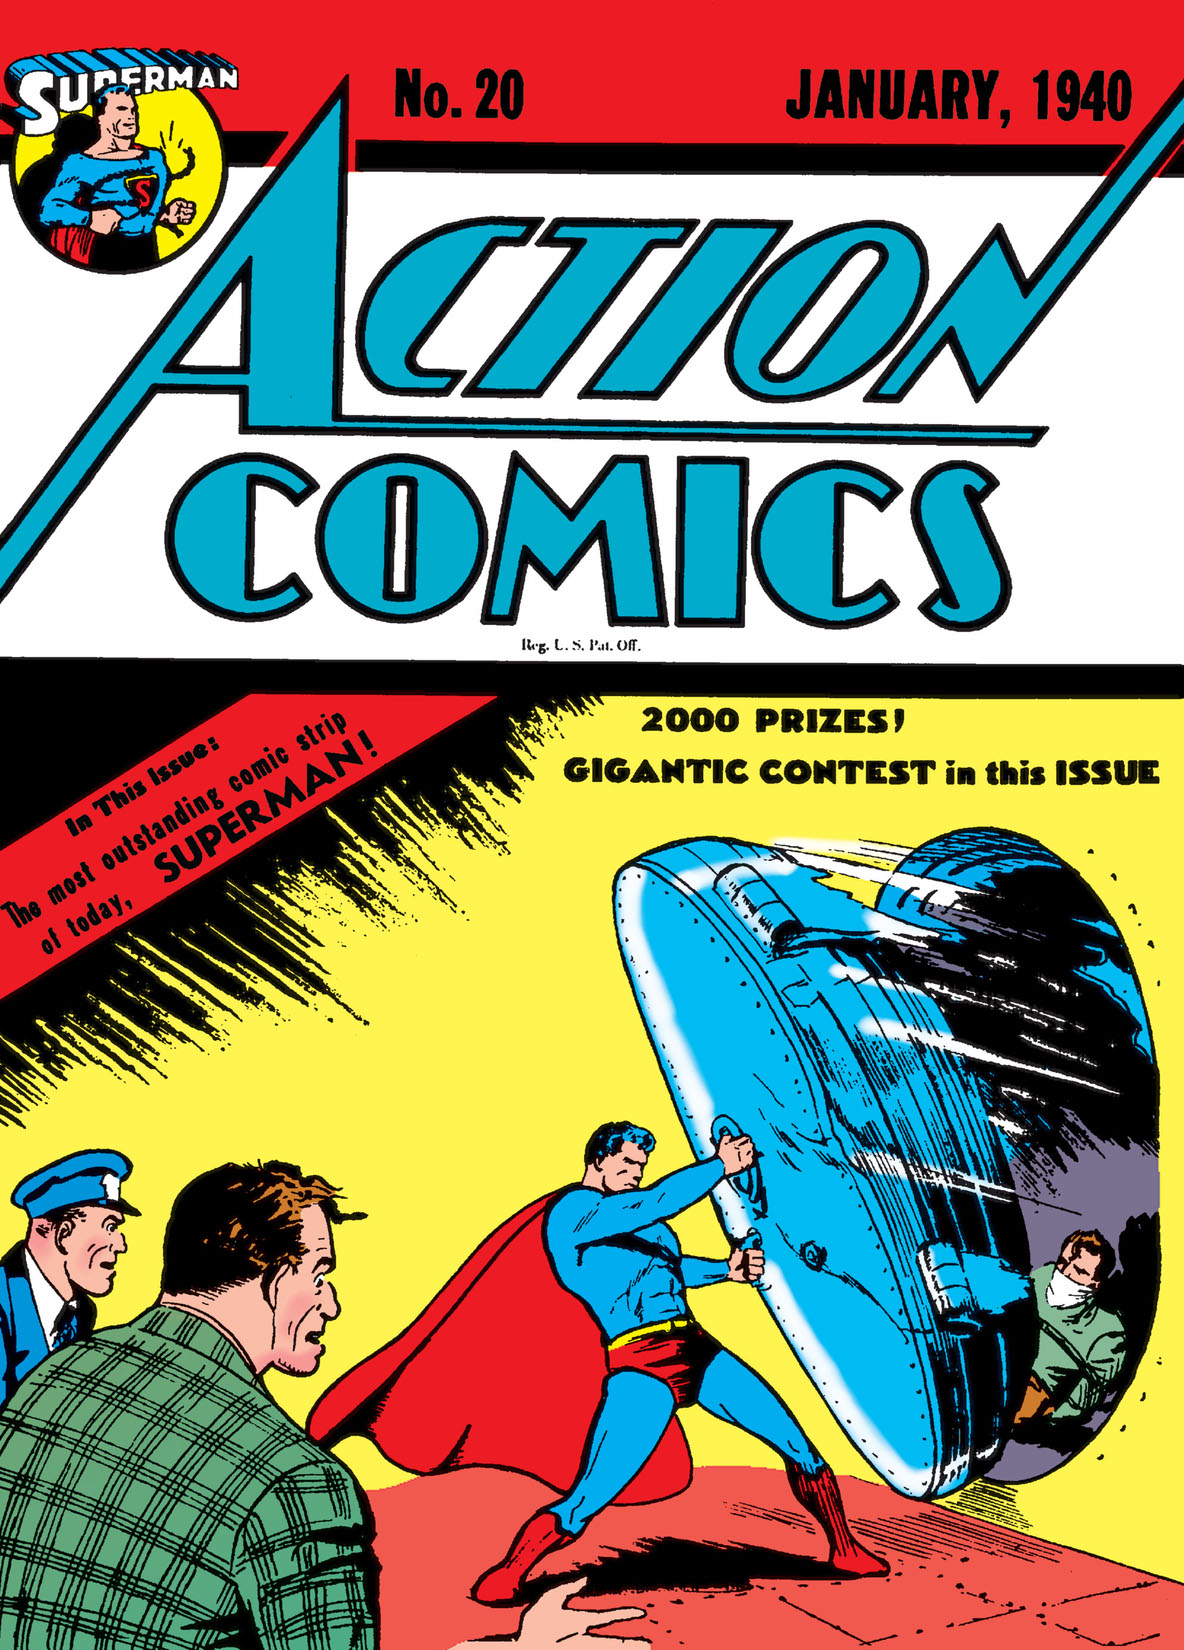 Action Comics (1938-) #20 preview images